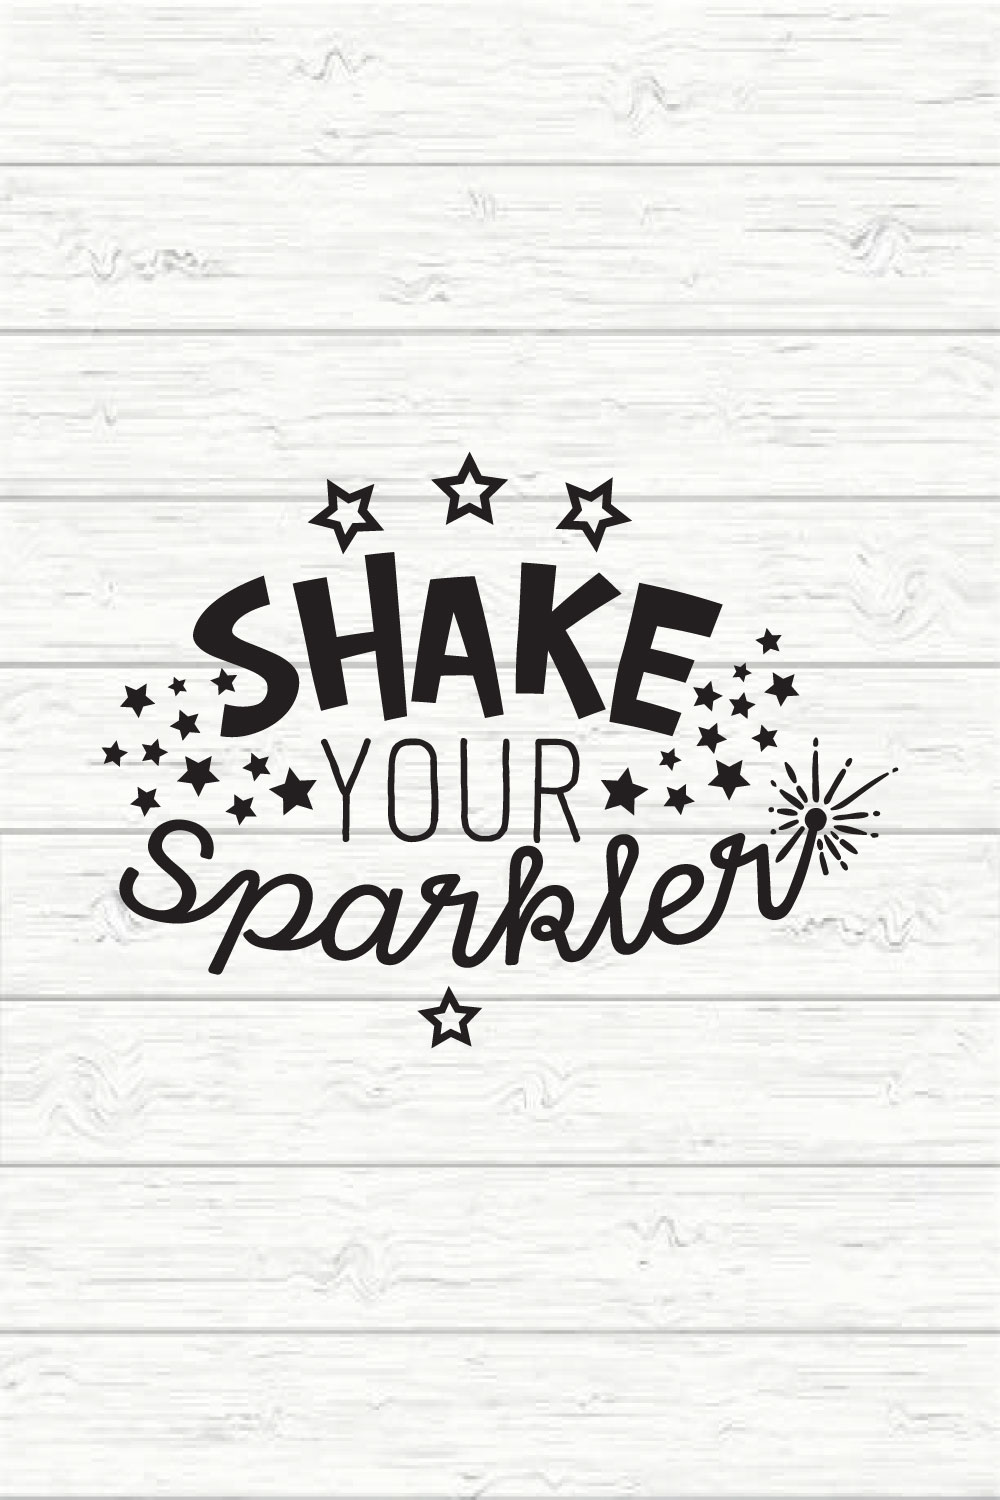 Shake your Sparkler pinterest preview image.